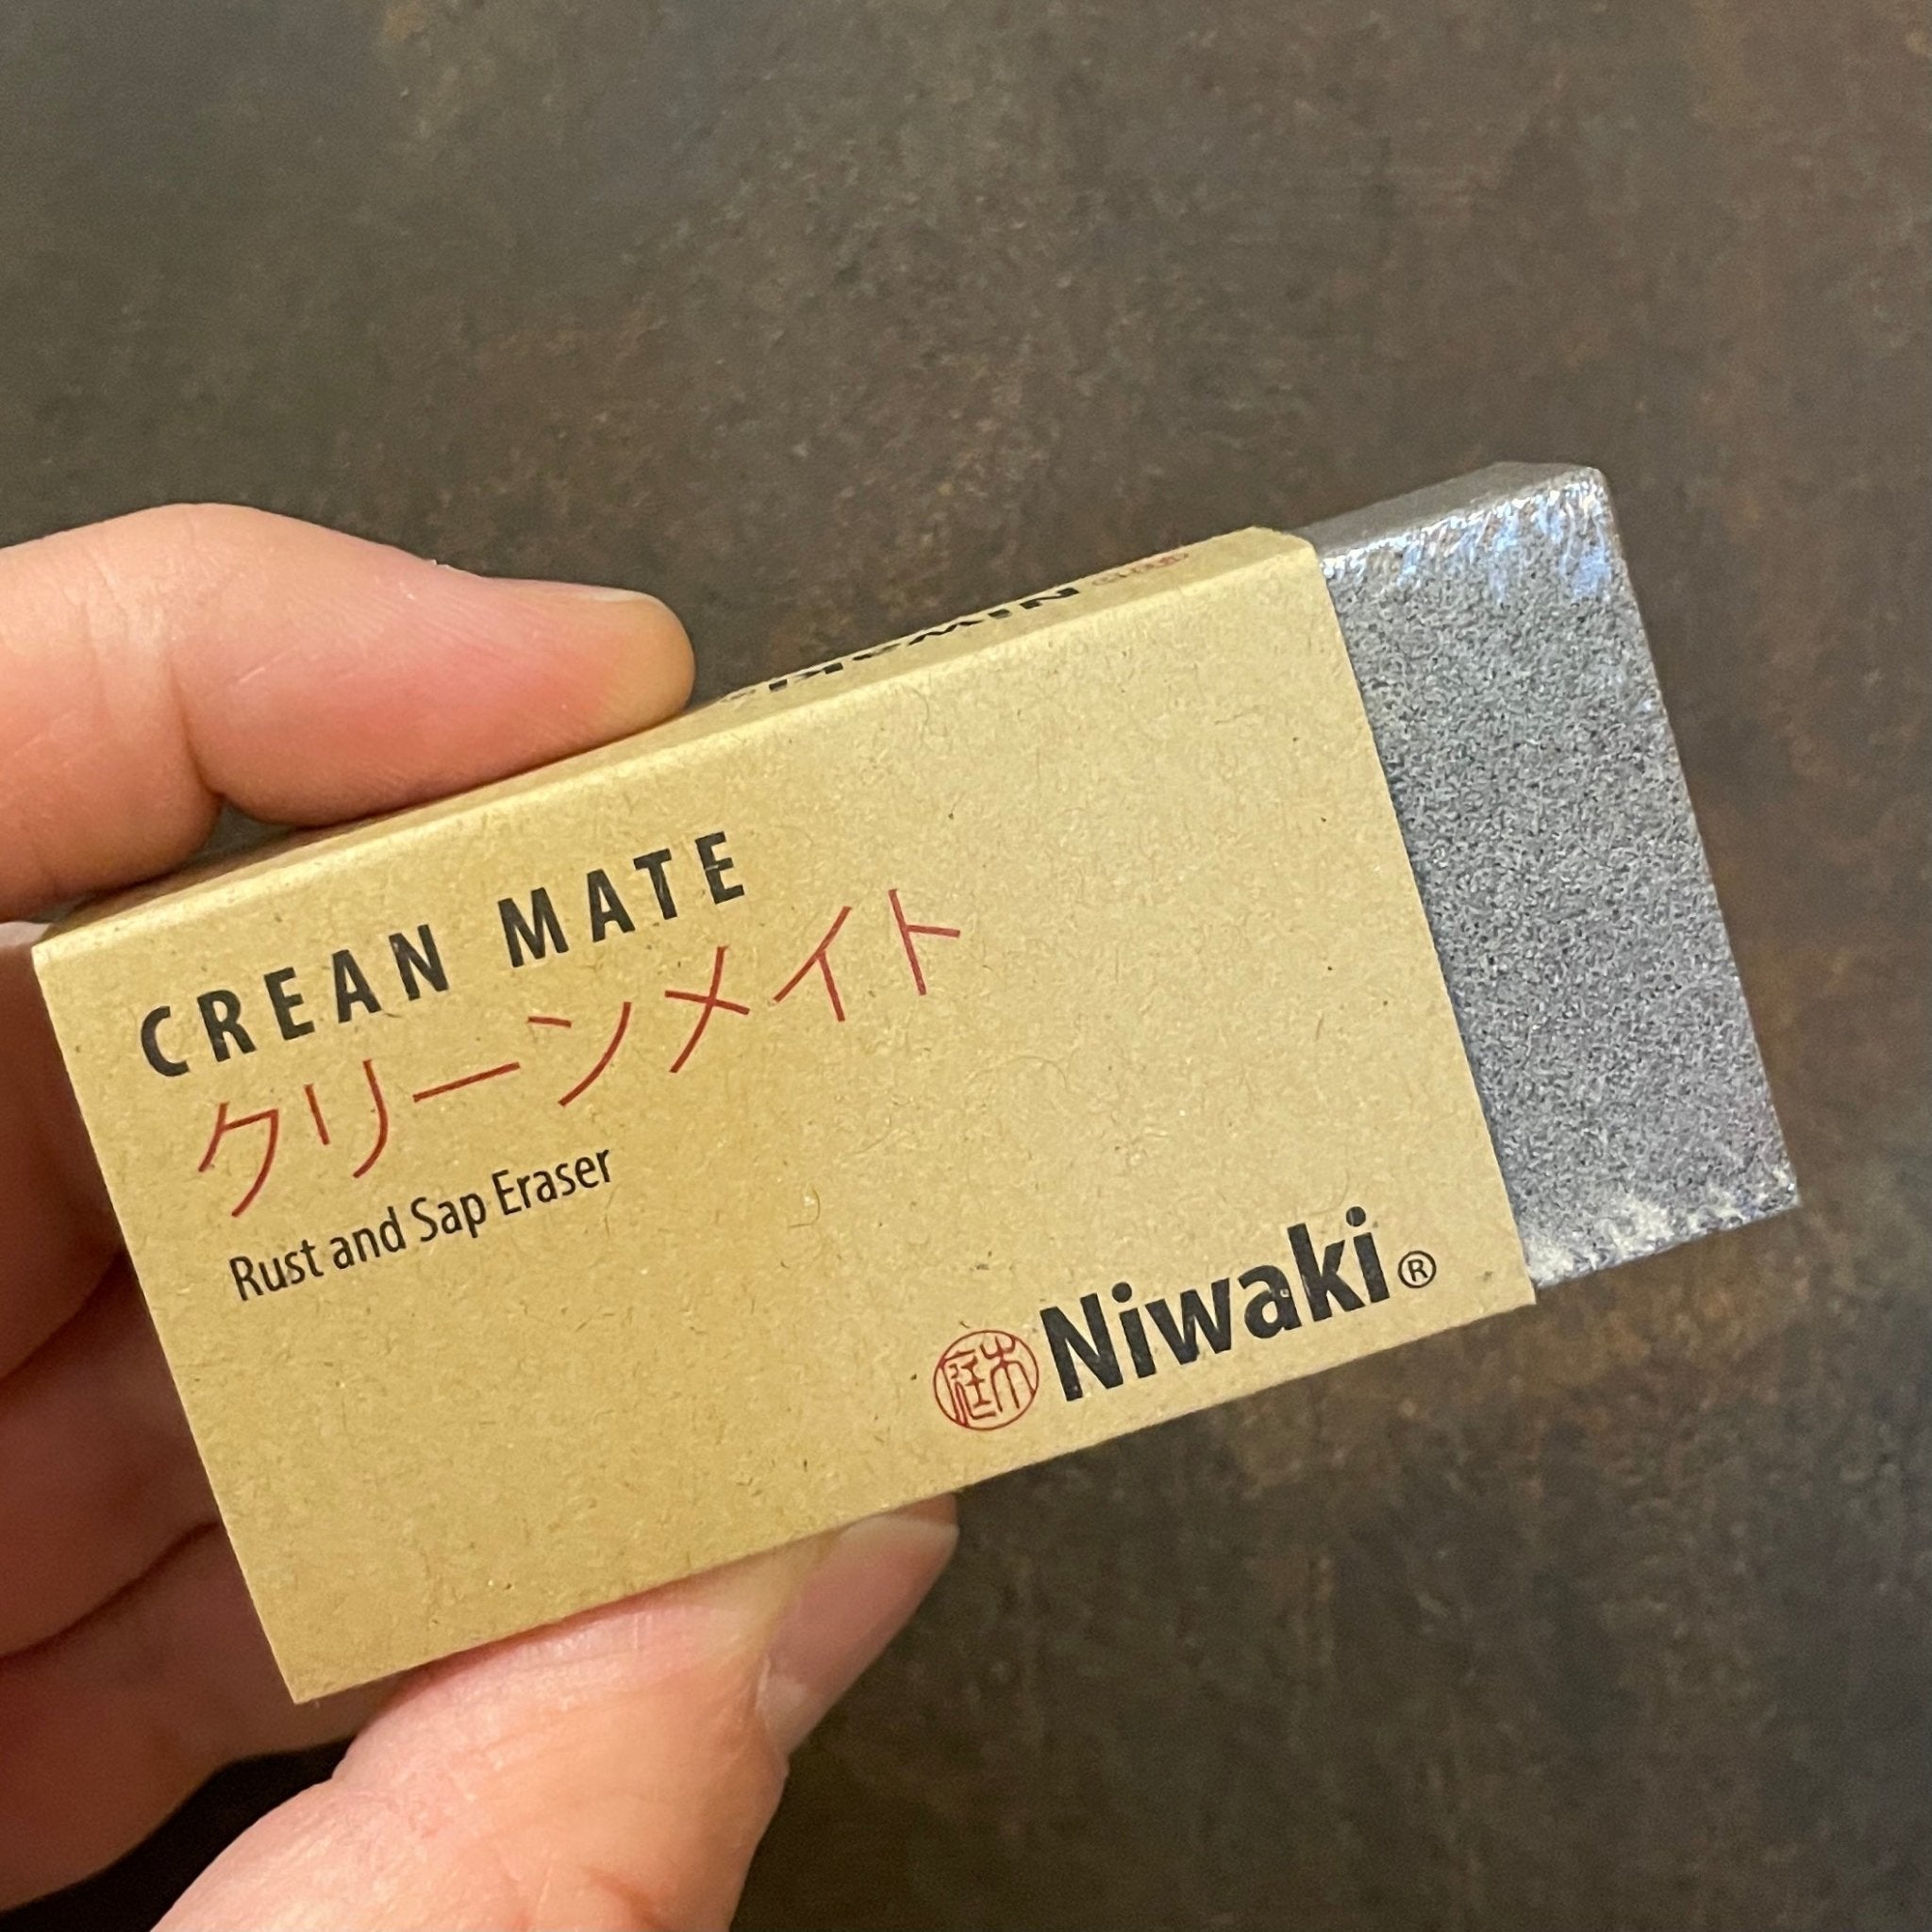 Niwaki Crean Mate - grow urban. UK